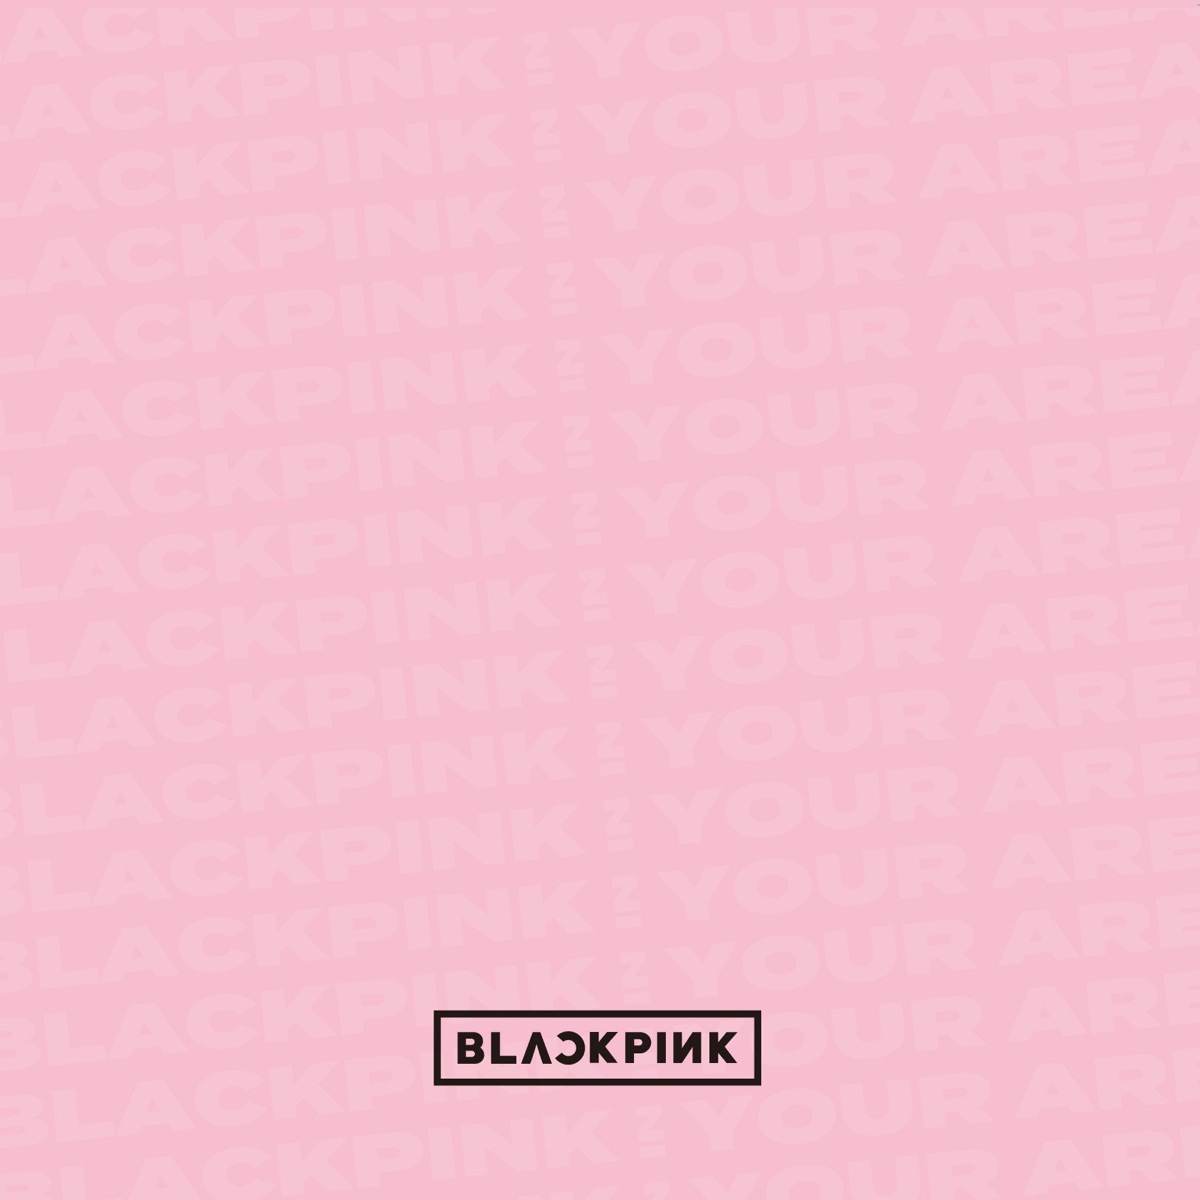 THE ALBUM - Album by BLACKPINK - Apple Music